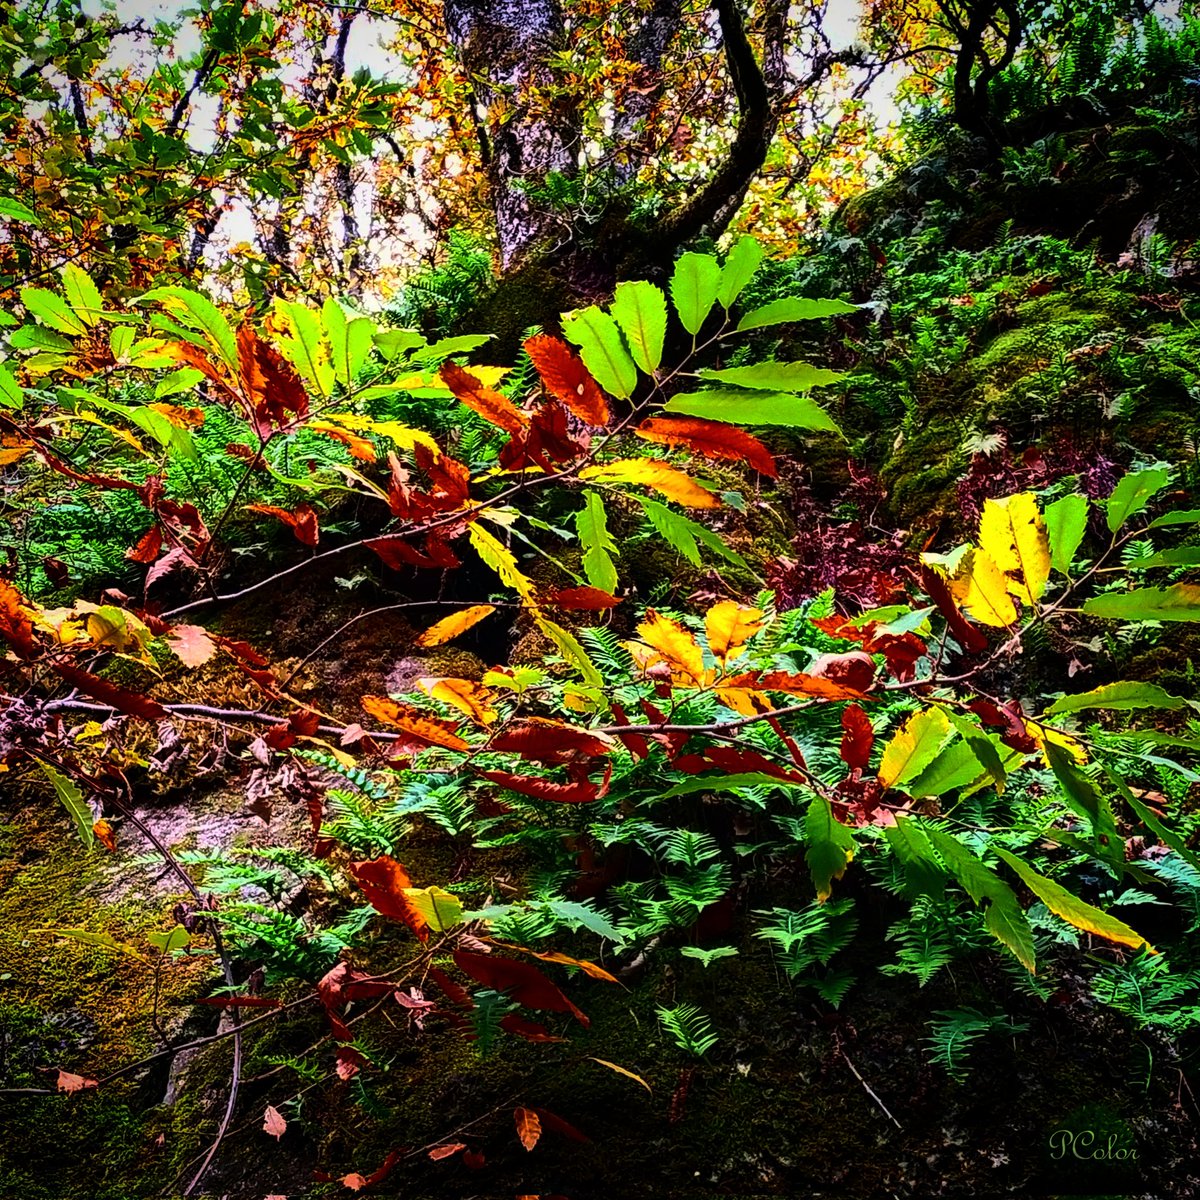 Hojas de colores
.
#otoño #colores #coloresbonitos #hacerfotos #ThePhotoMode #thePhotoHour #StormHour #photography #PhotoOfTheDay #RedmiNote10pro #hojasdecolores #autumnleaves #Diciembre